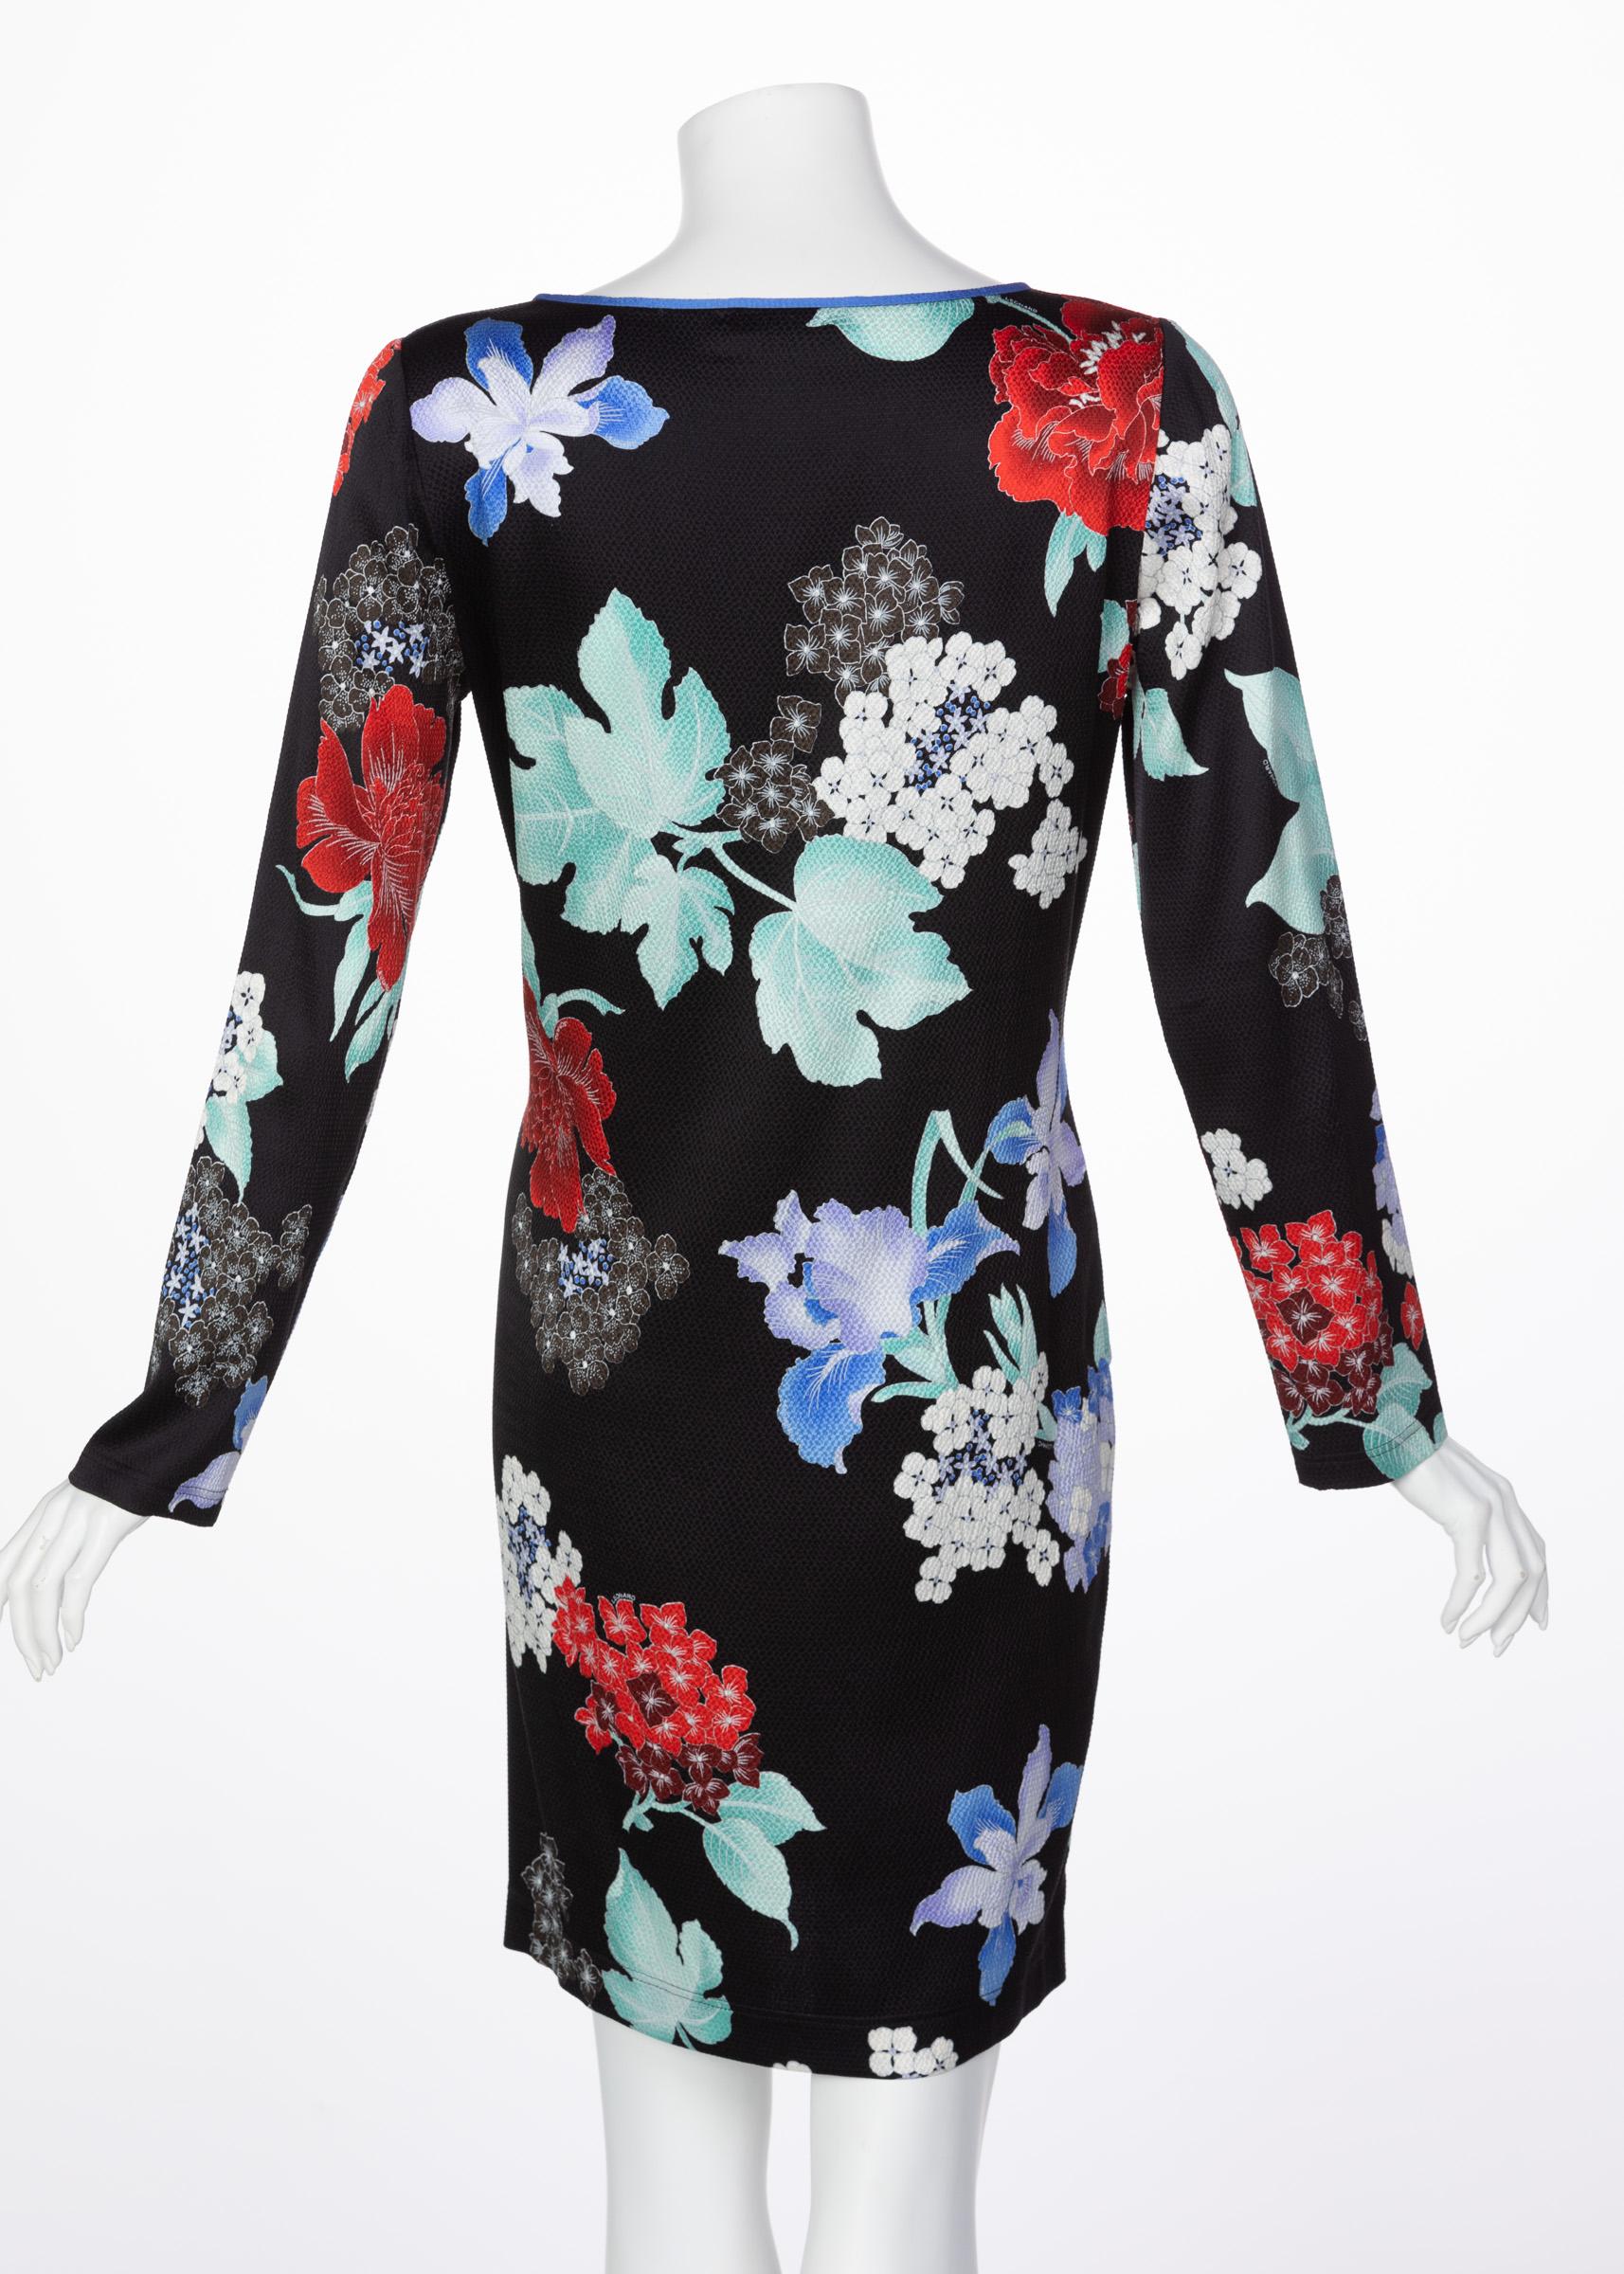 Women's Leonard Paris Silk Floral Print Dress, 2000s